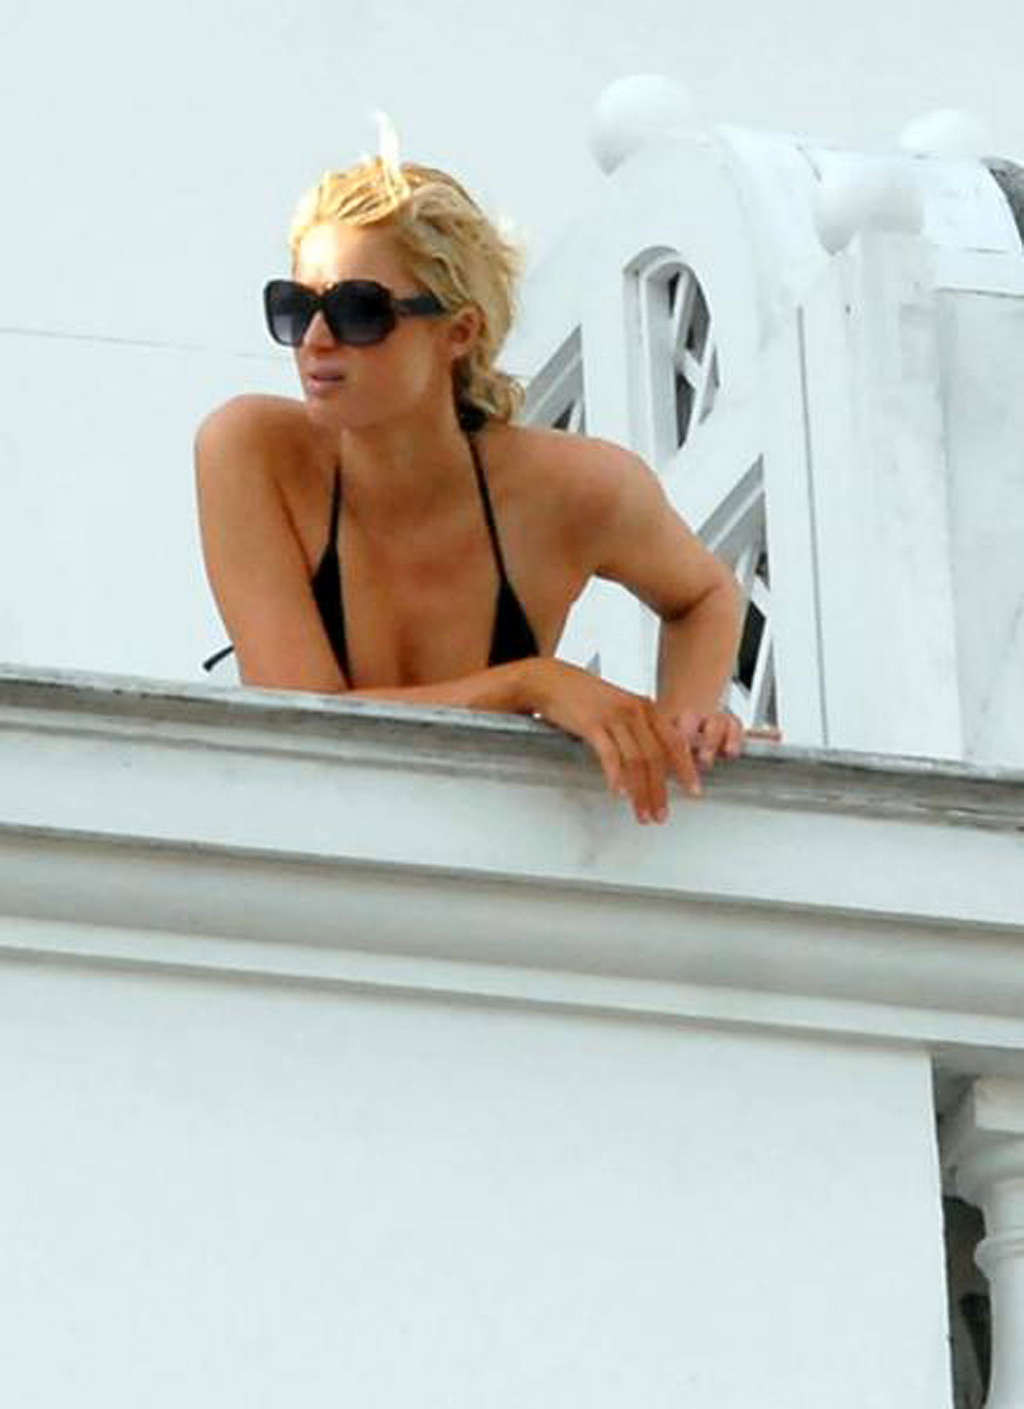 Paris Hilton enjoying on pool in topless very hot photos #75356483